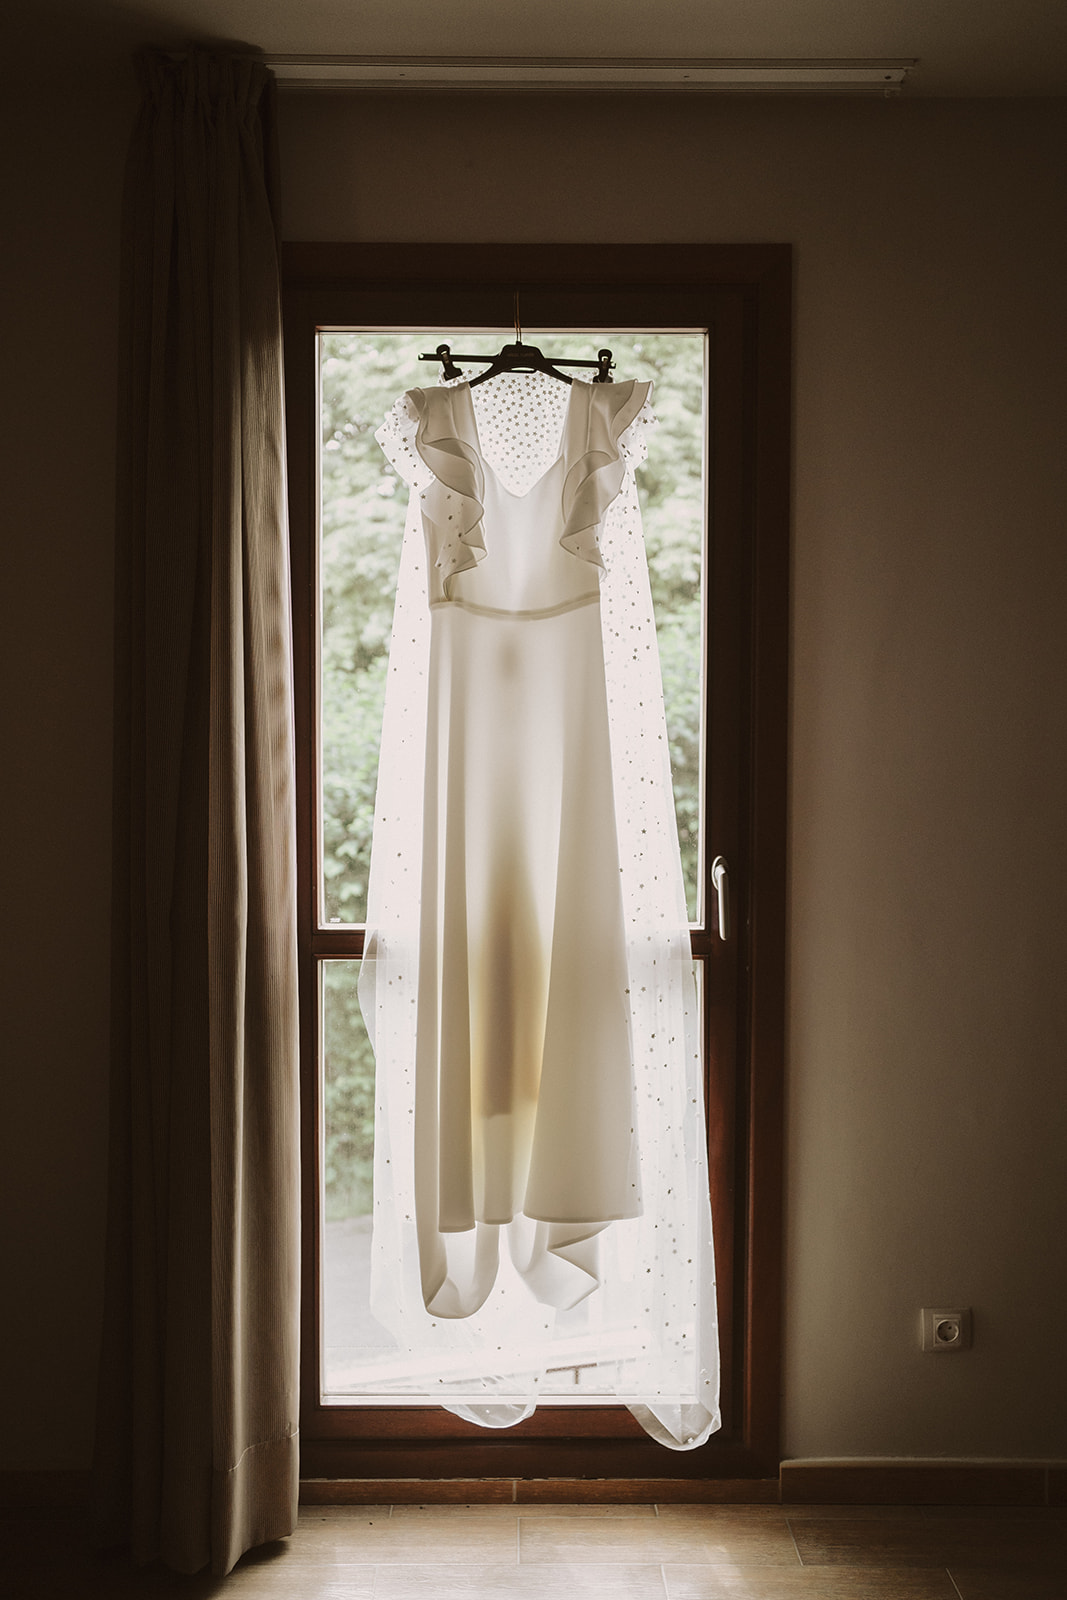 vestido de la novia colgado de una ventana